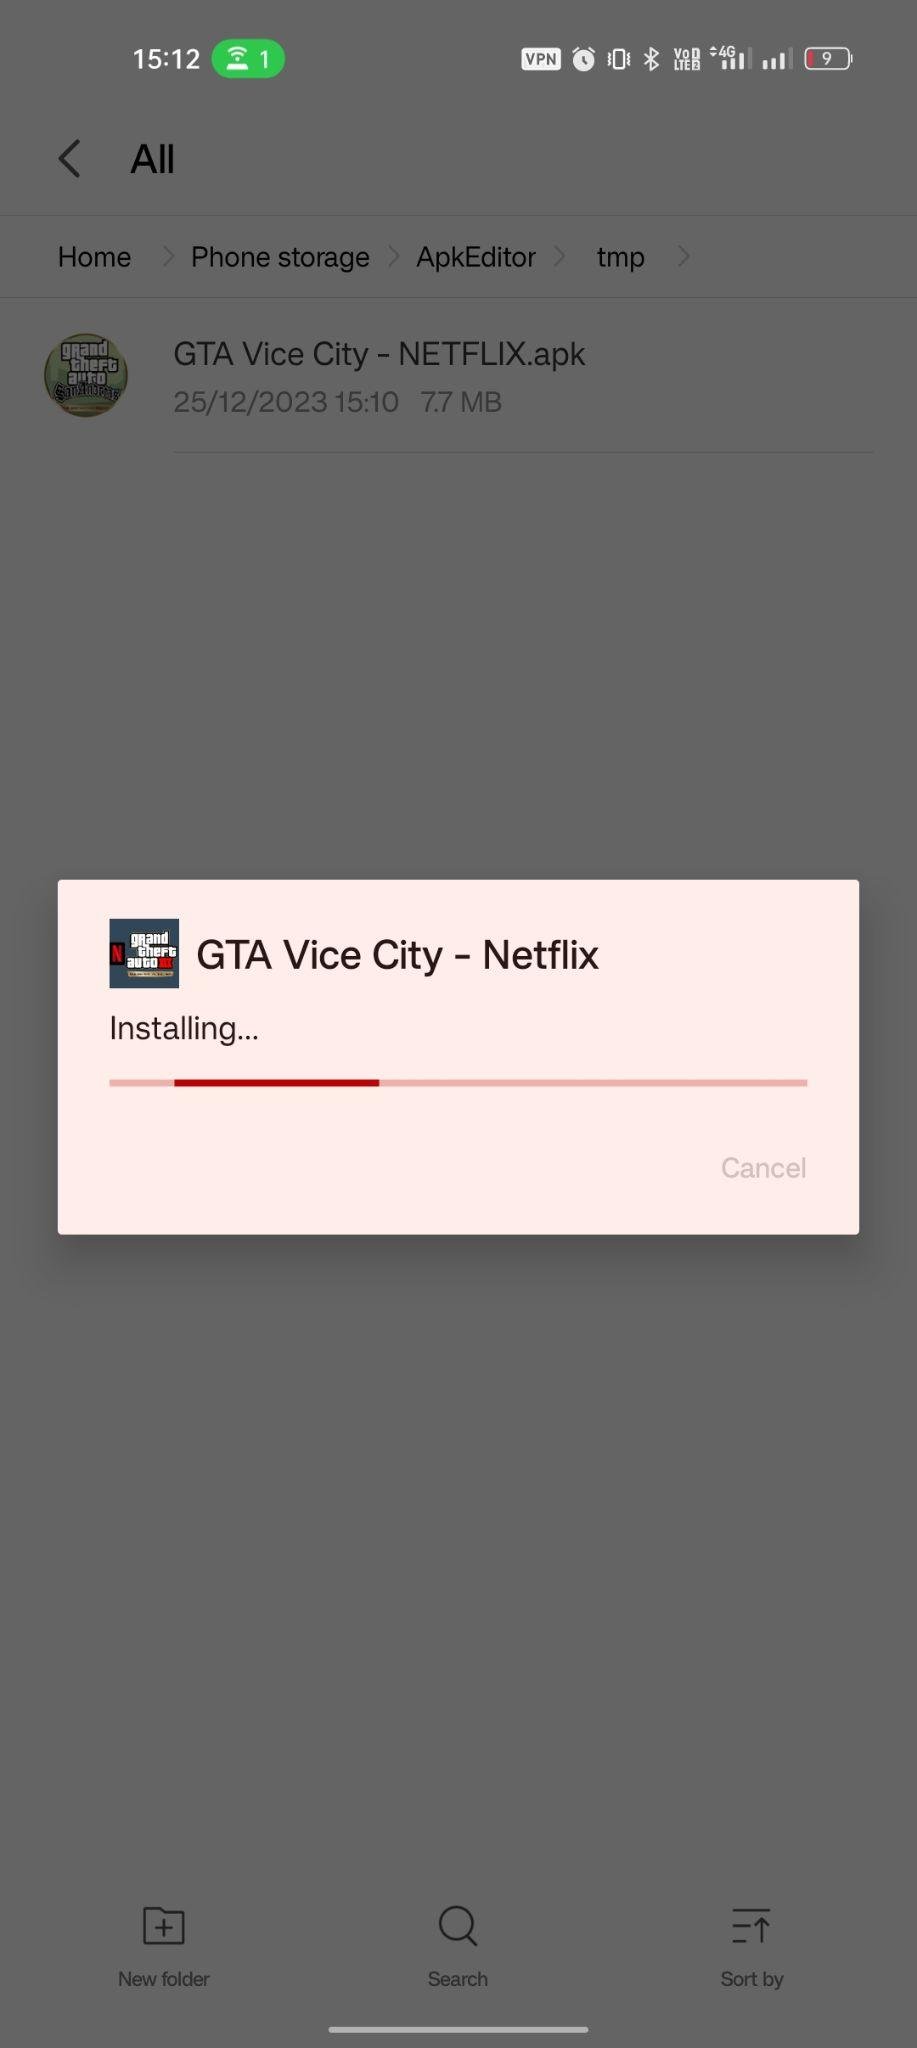 GTA: Vice City - Netflix apk installing